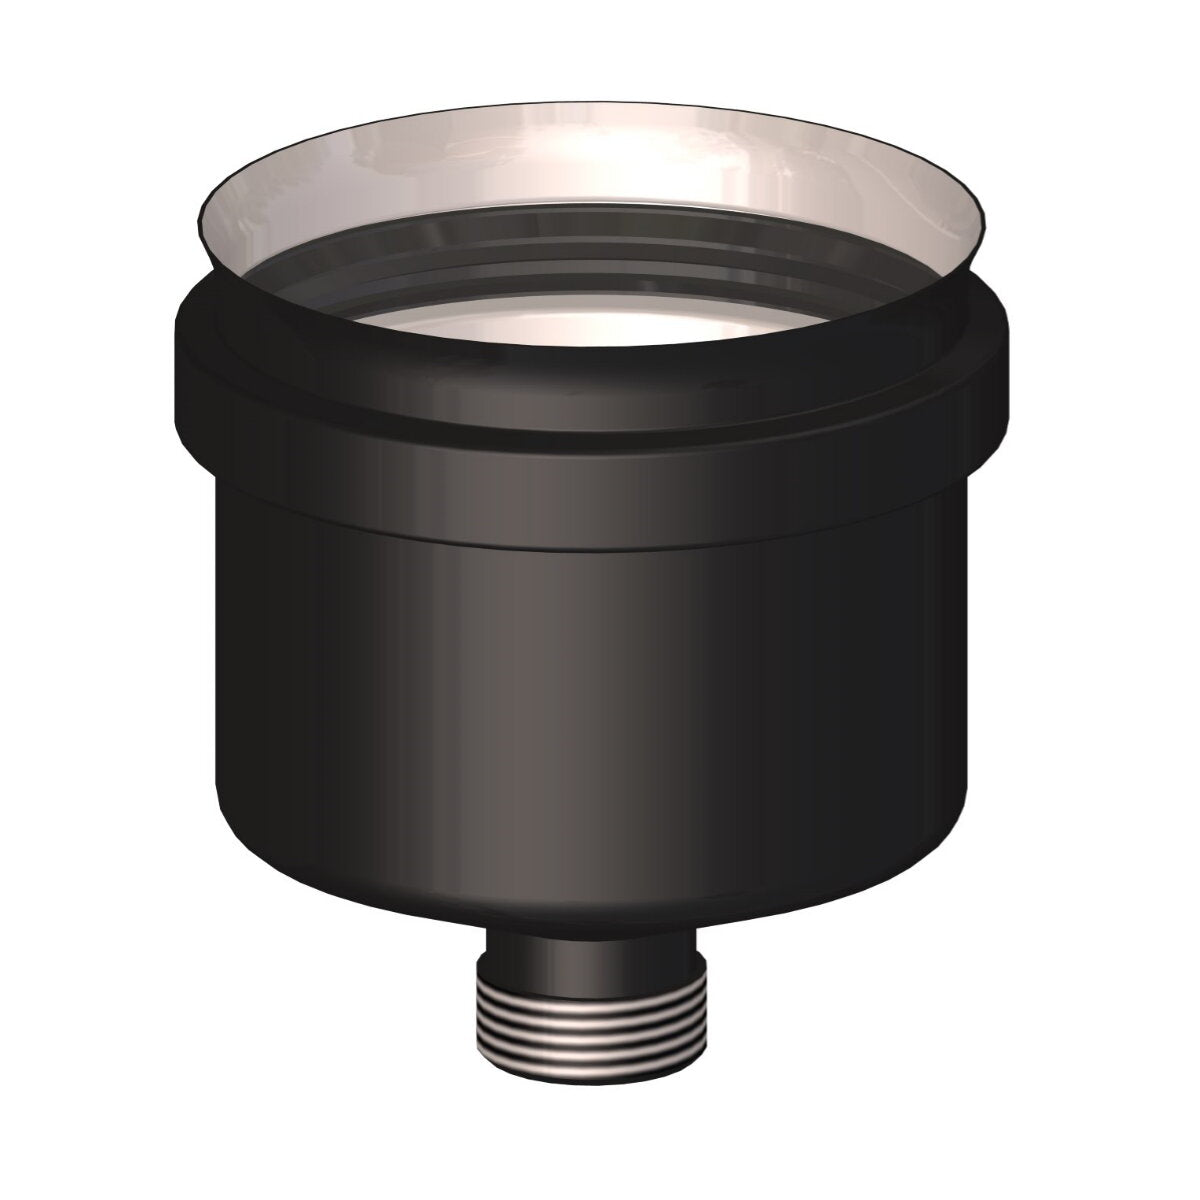 Condensate drain plug diam. 100 mm for pellet stove and pellet boiler fume exhaust